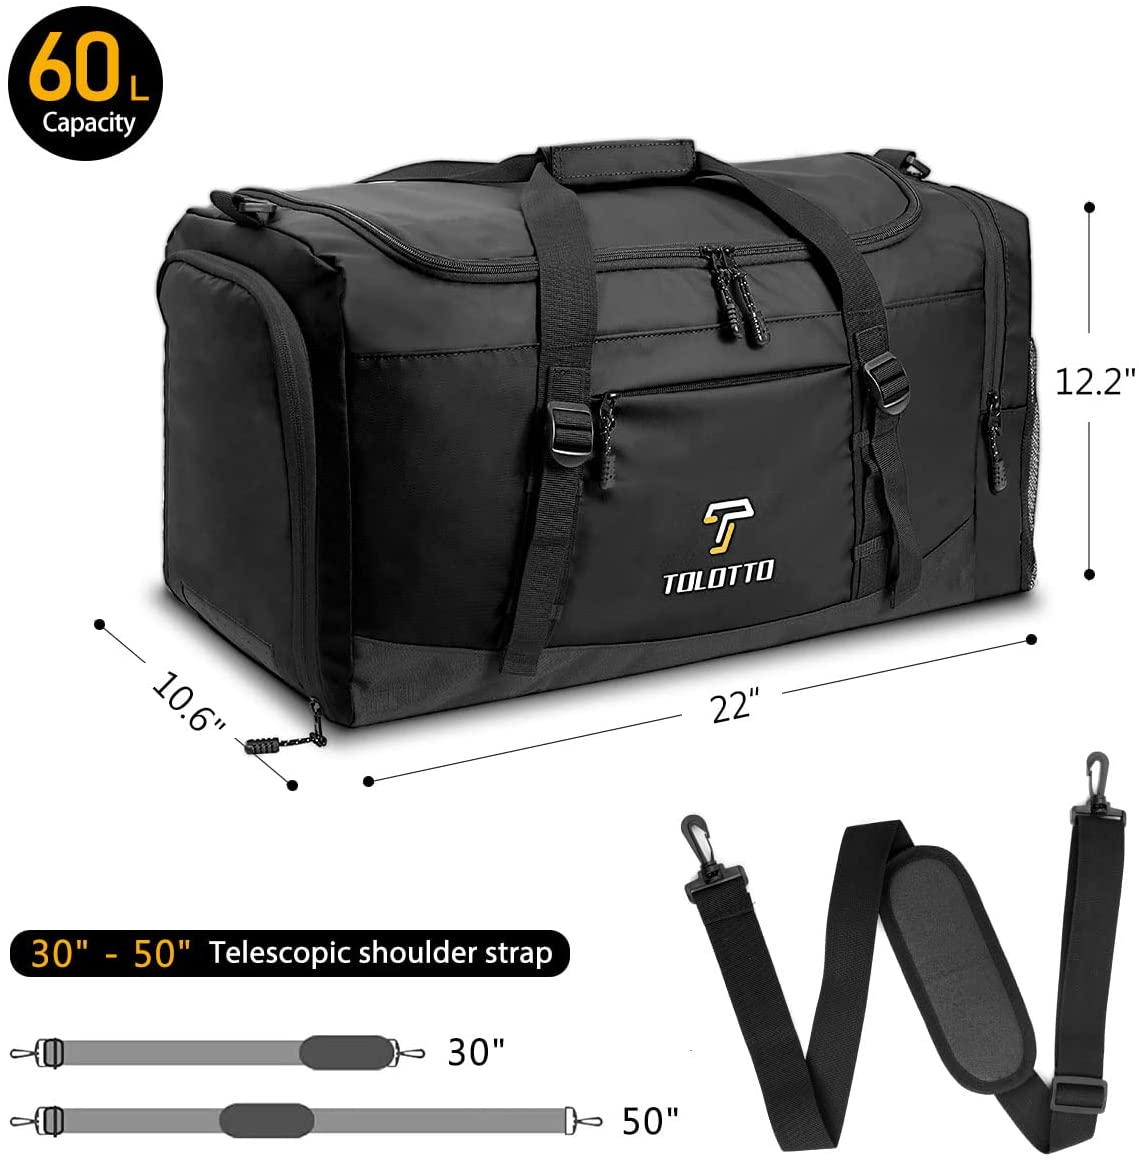 Sport Gym Bag for Men, Tolotto Travel Duffel Bag with Wet Pocket & Shoes Compartment for Men/Women - Carry on Shoulder Weekender Bag, Lightweight & Waterproof (Black)